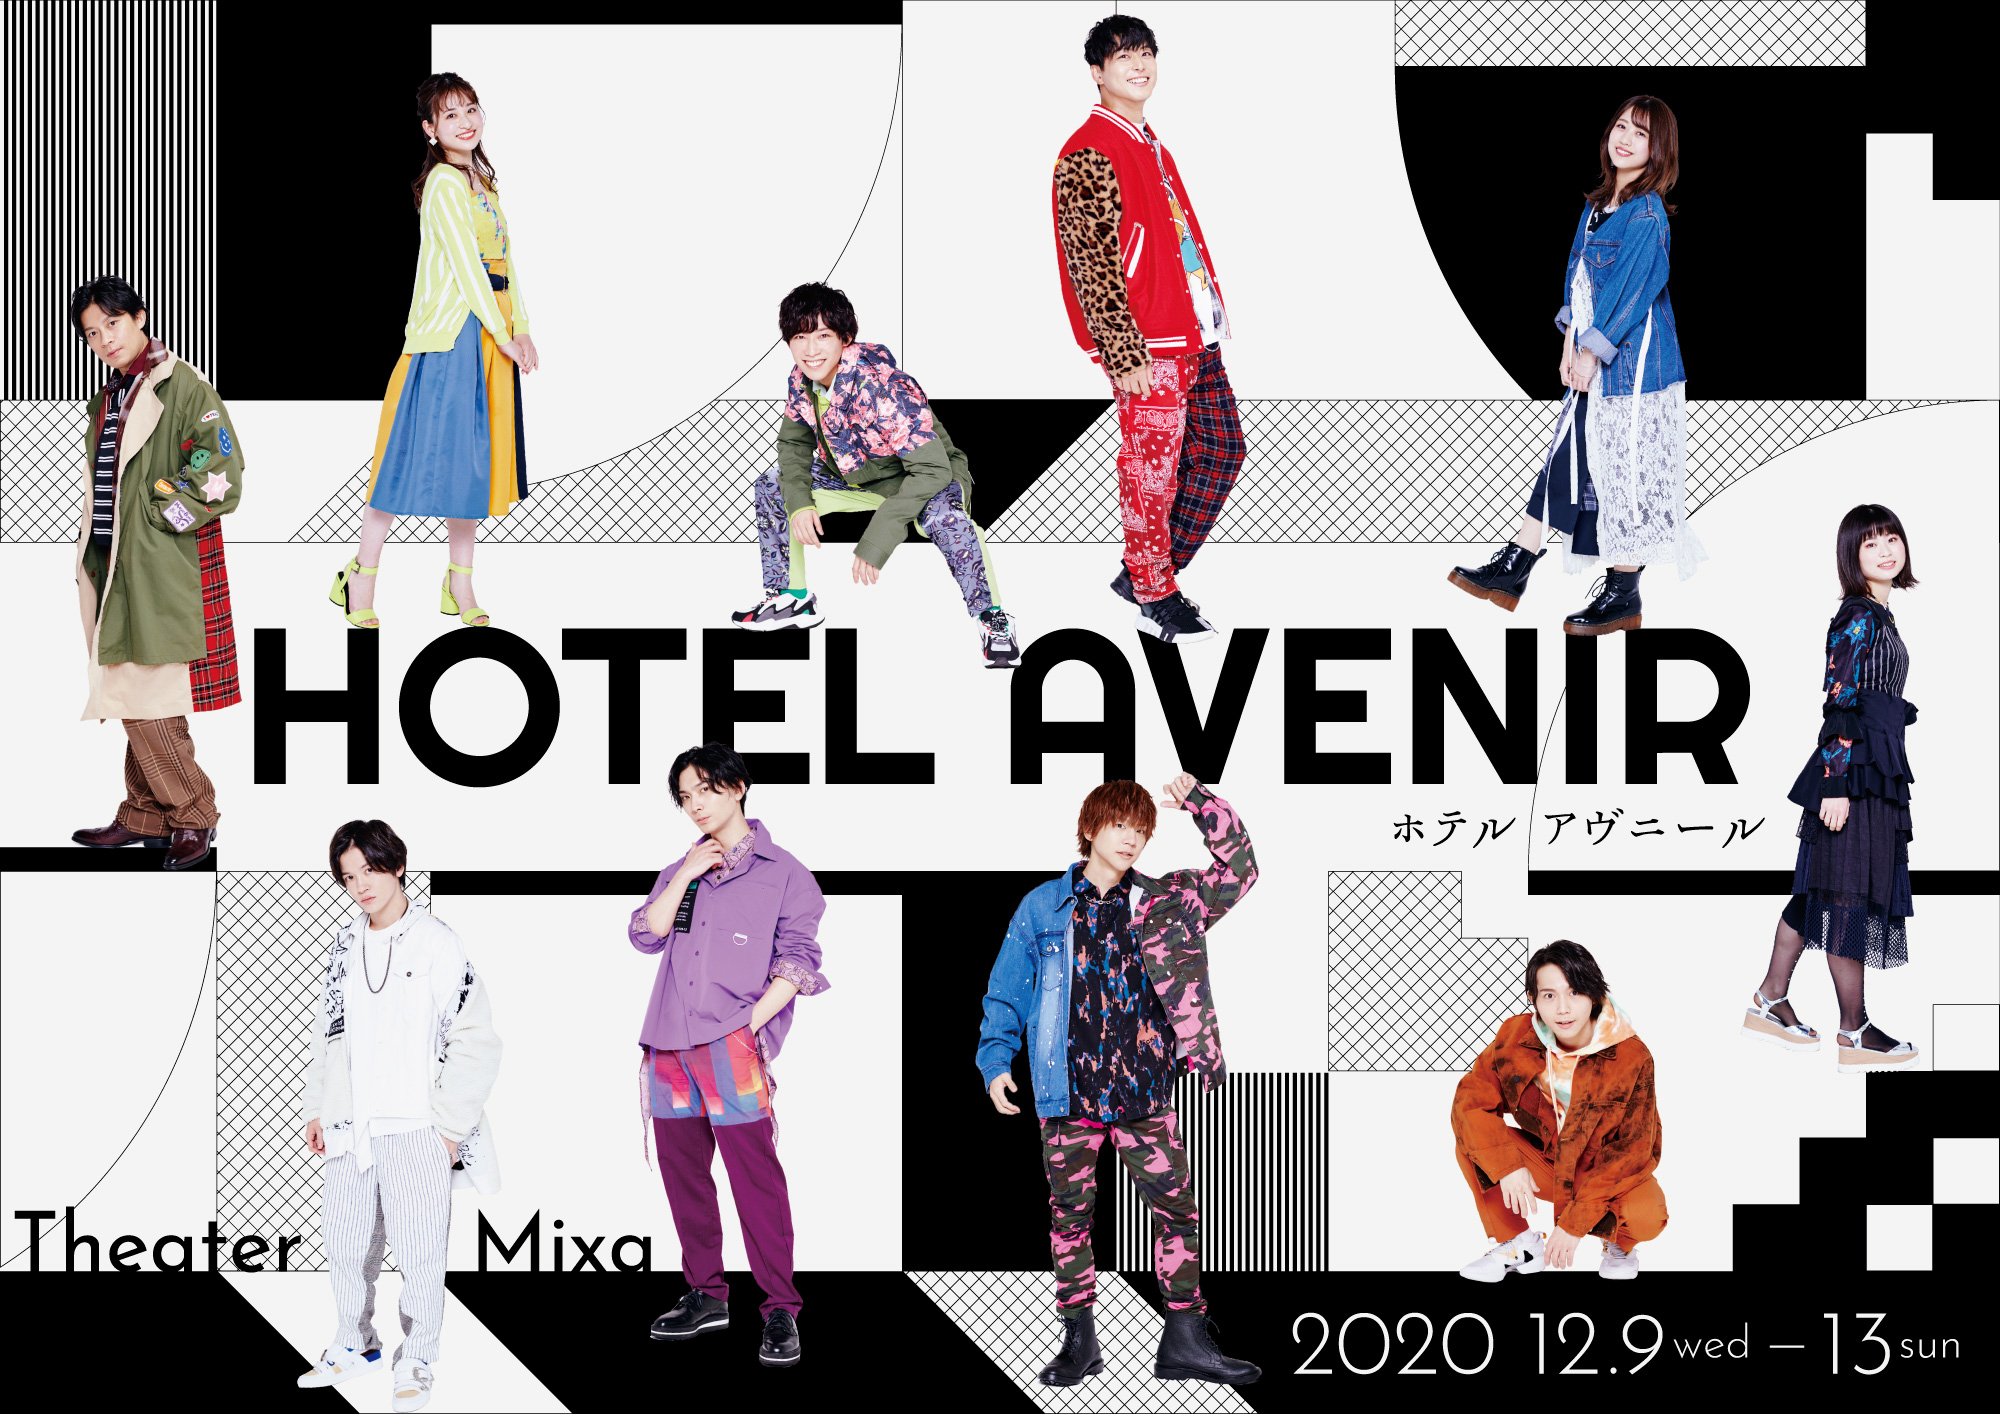 Hotel Avenir at Theater Mixa 2020.12.9 wed - 2020.12.13 sun